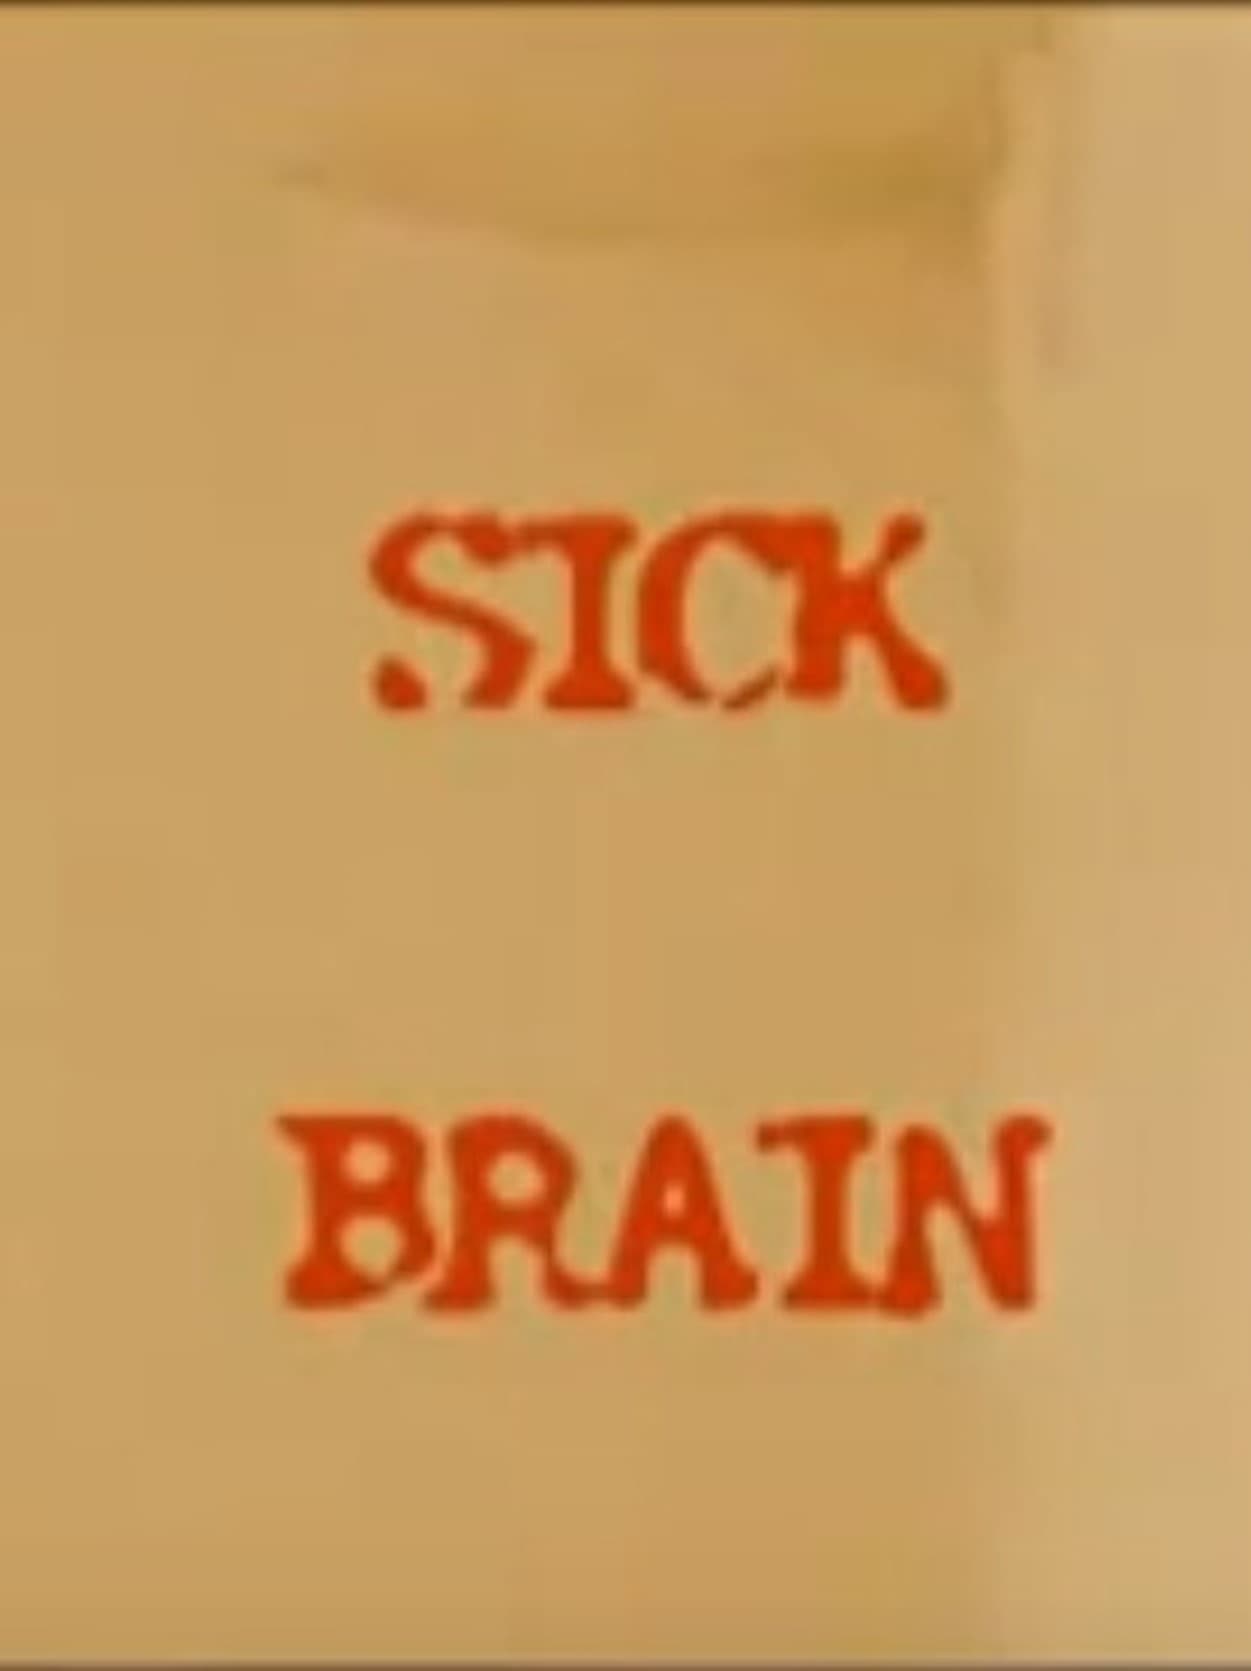 Sick Brain